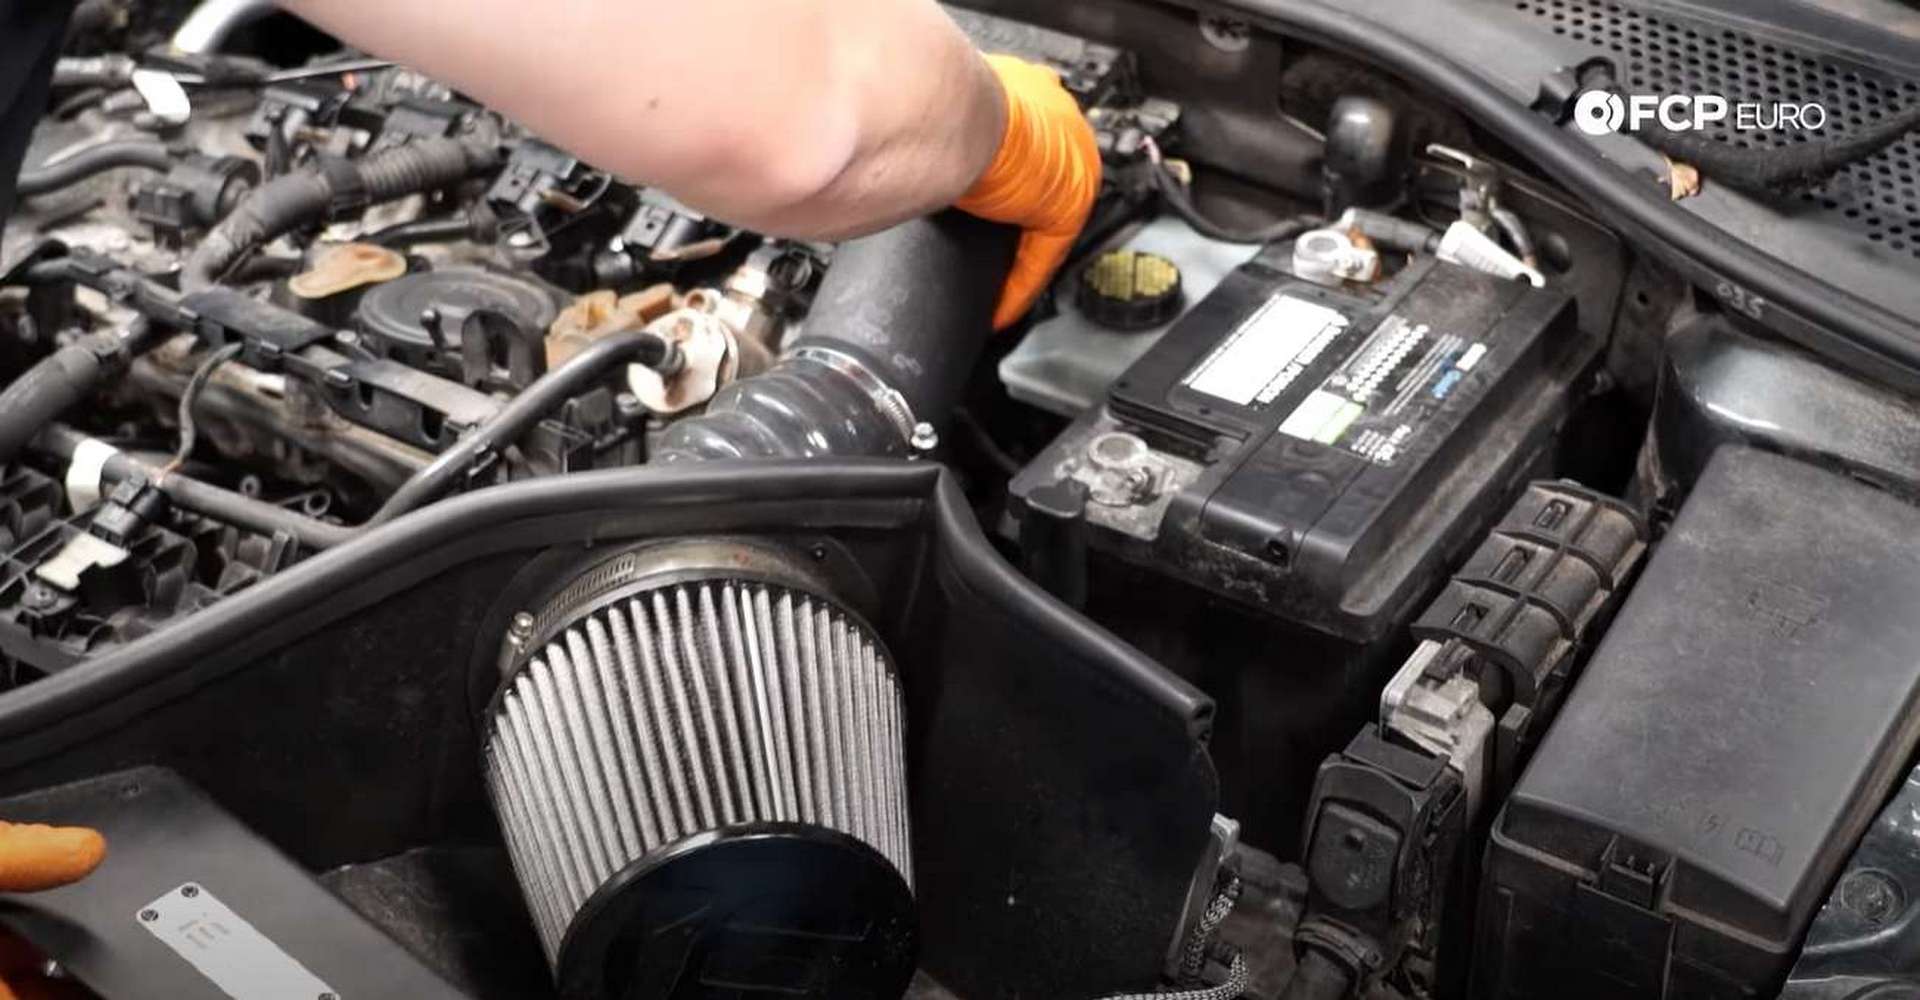 DIY MK7 VW GTI Turbocharger Upgrade refitting the intake